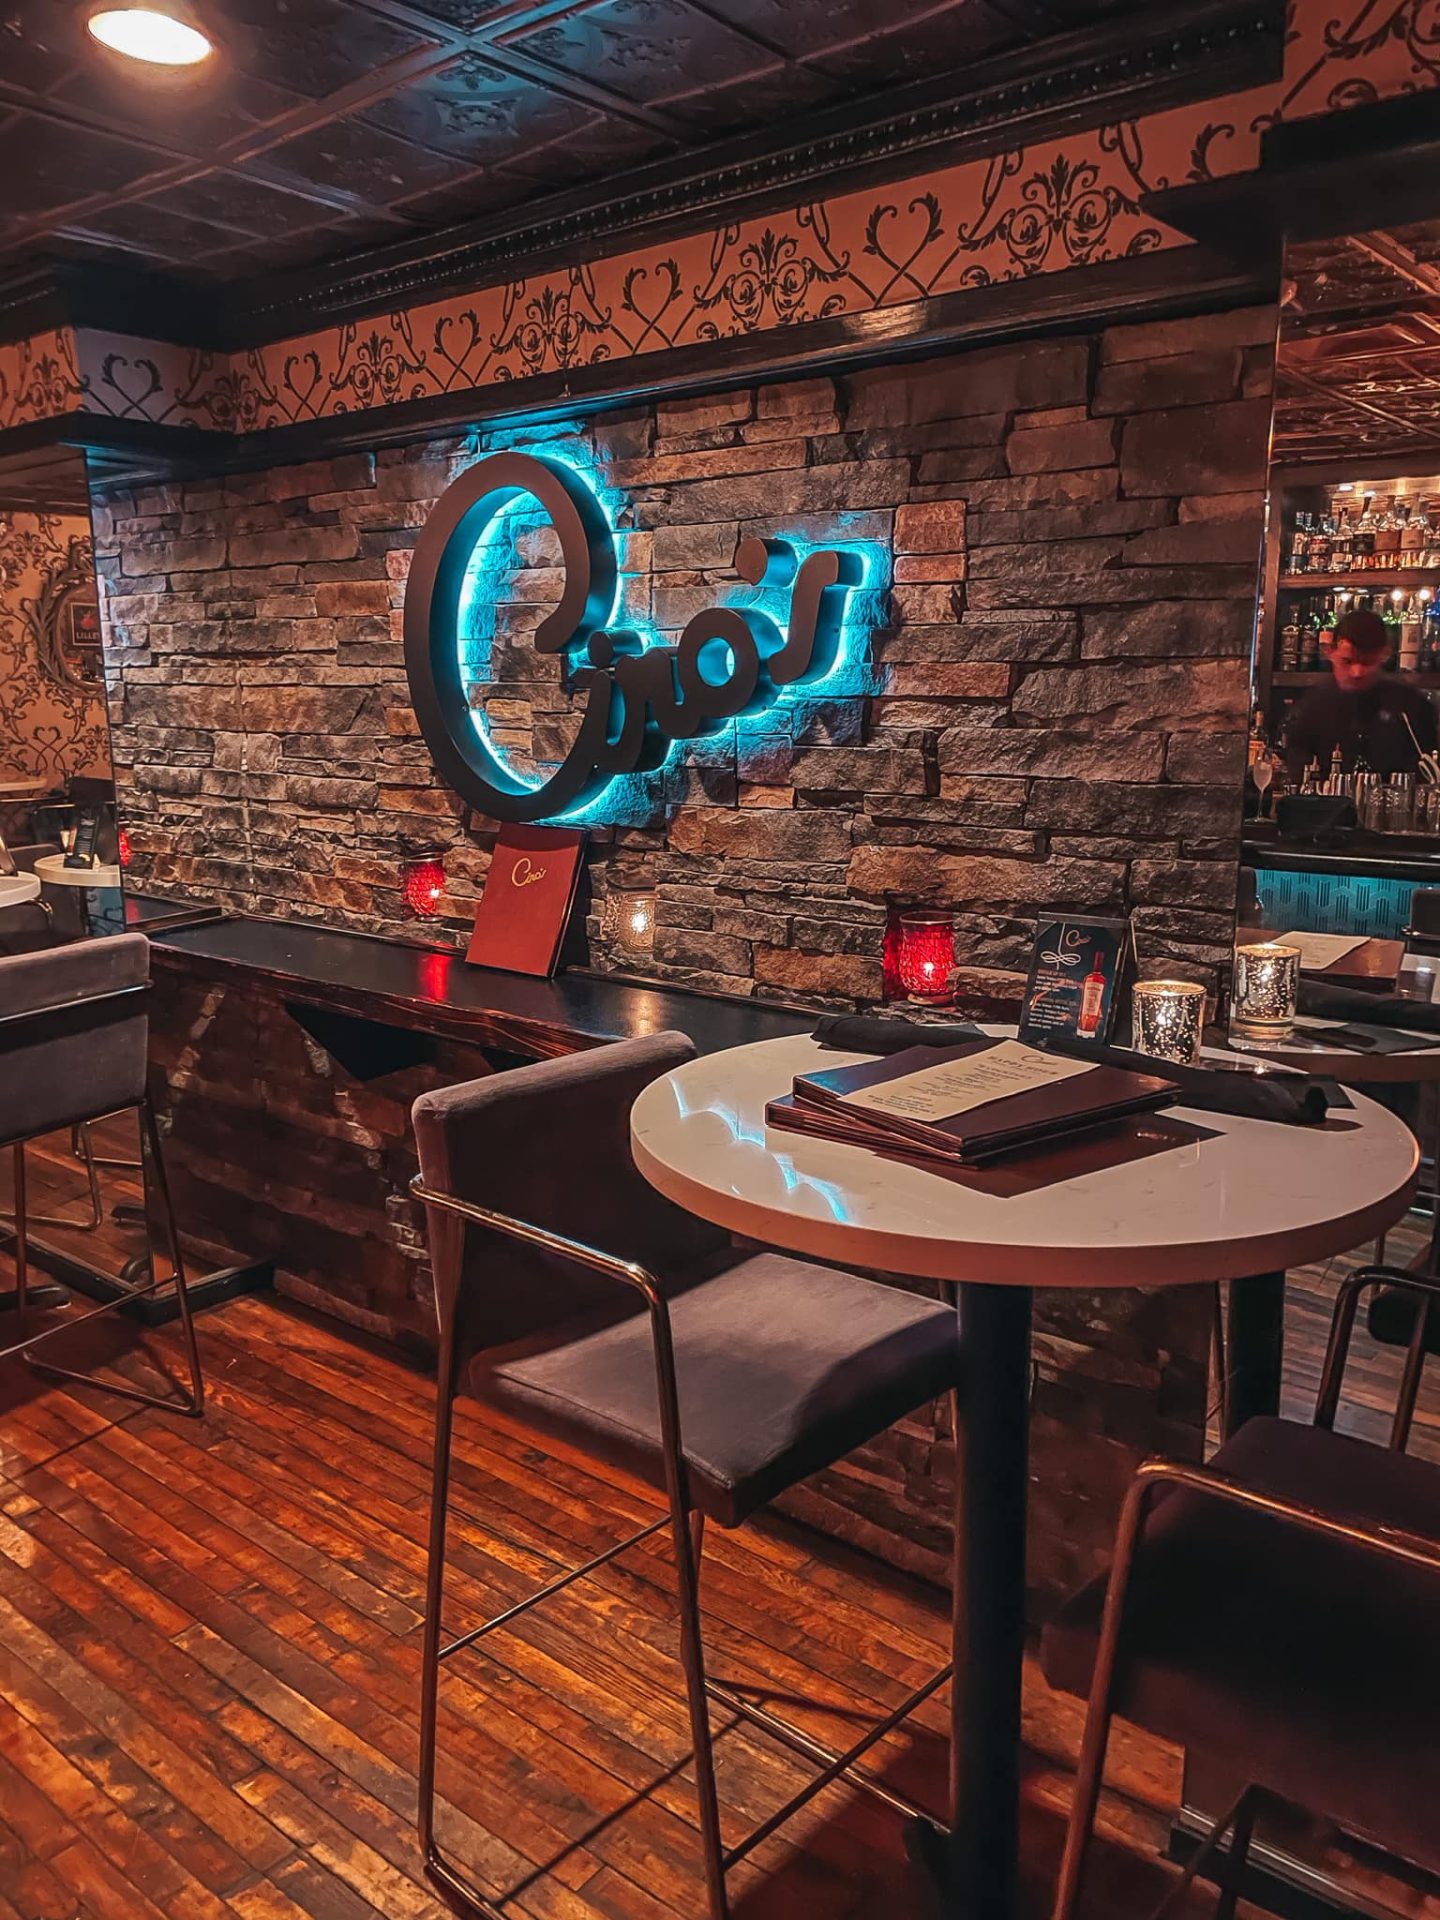 Lounge area of Ciro's Speakeasy for date night restaurants